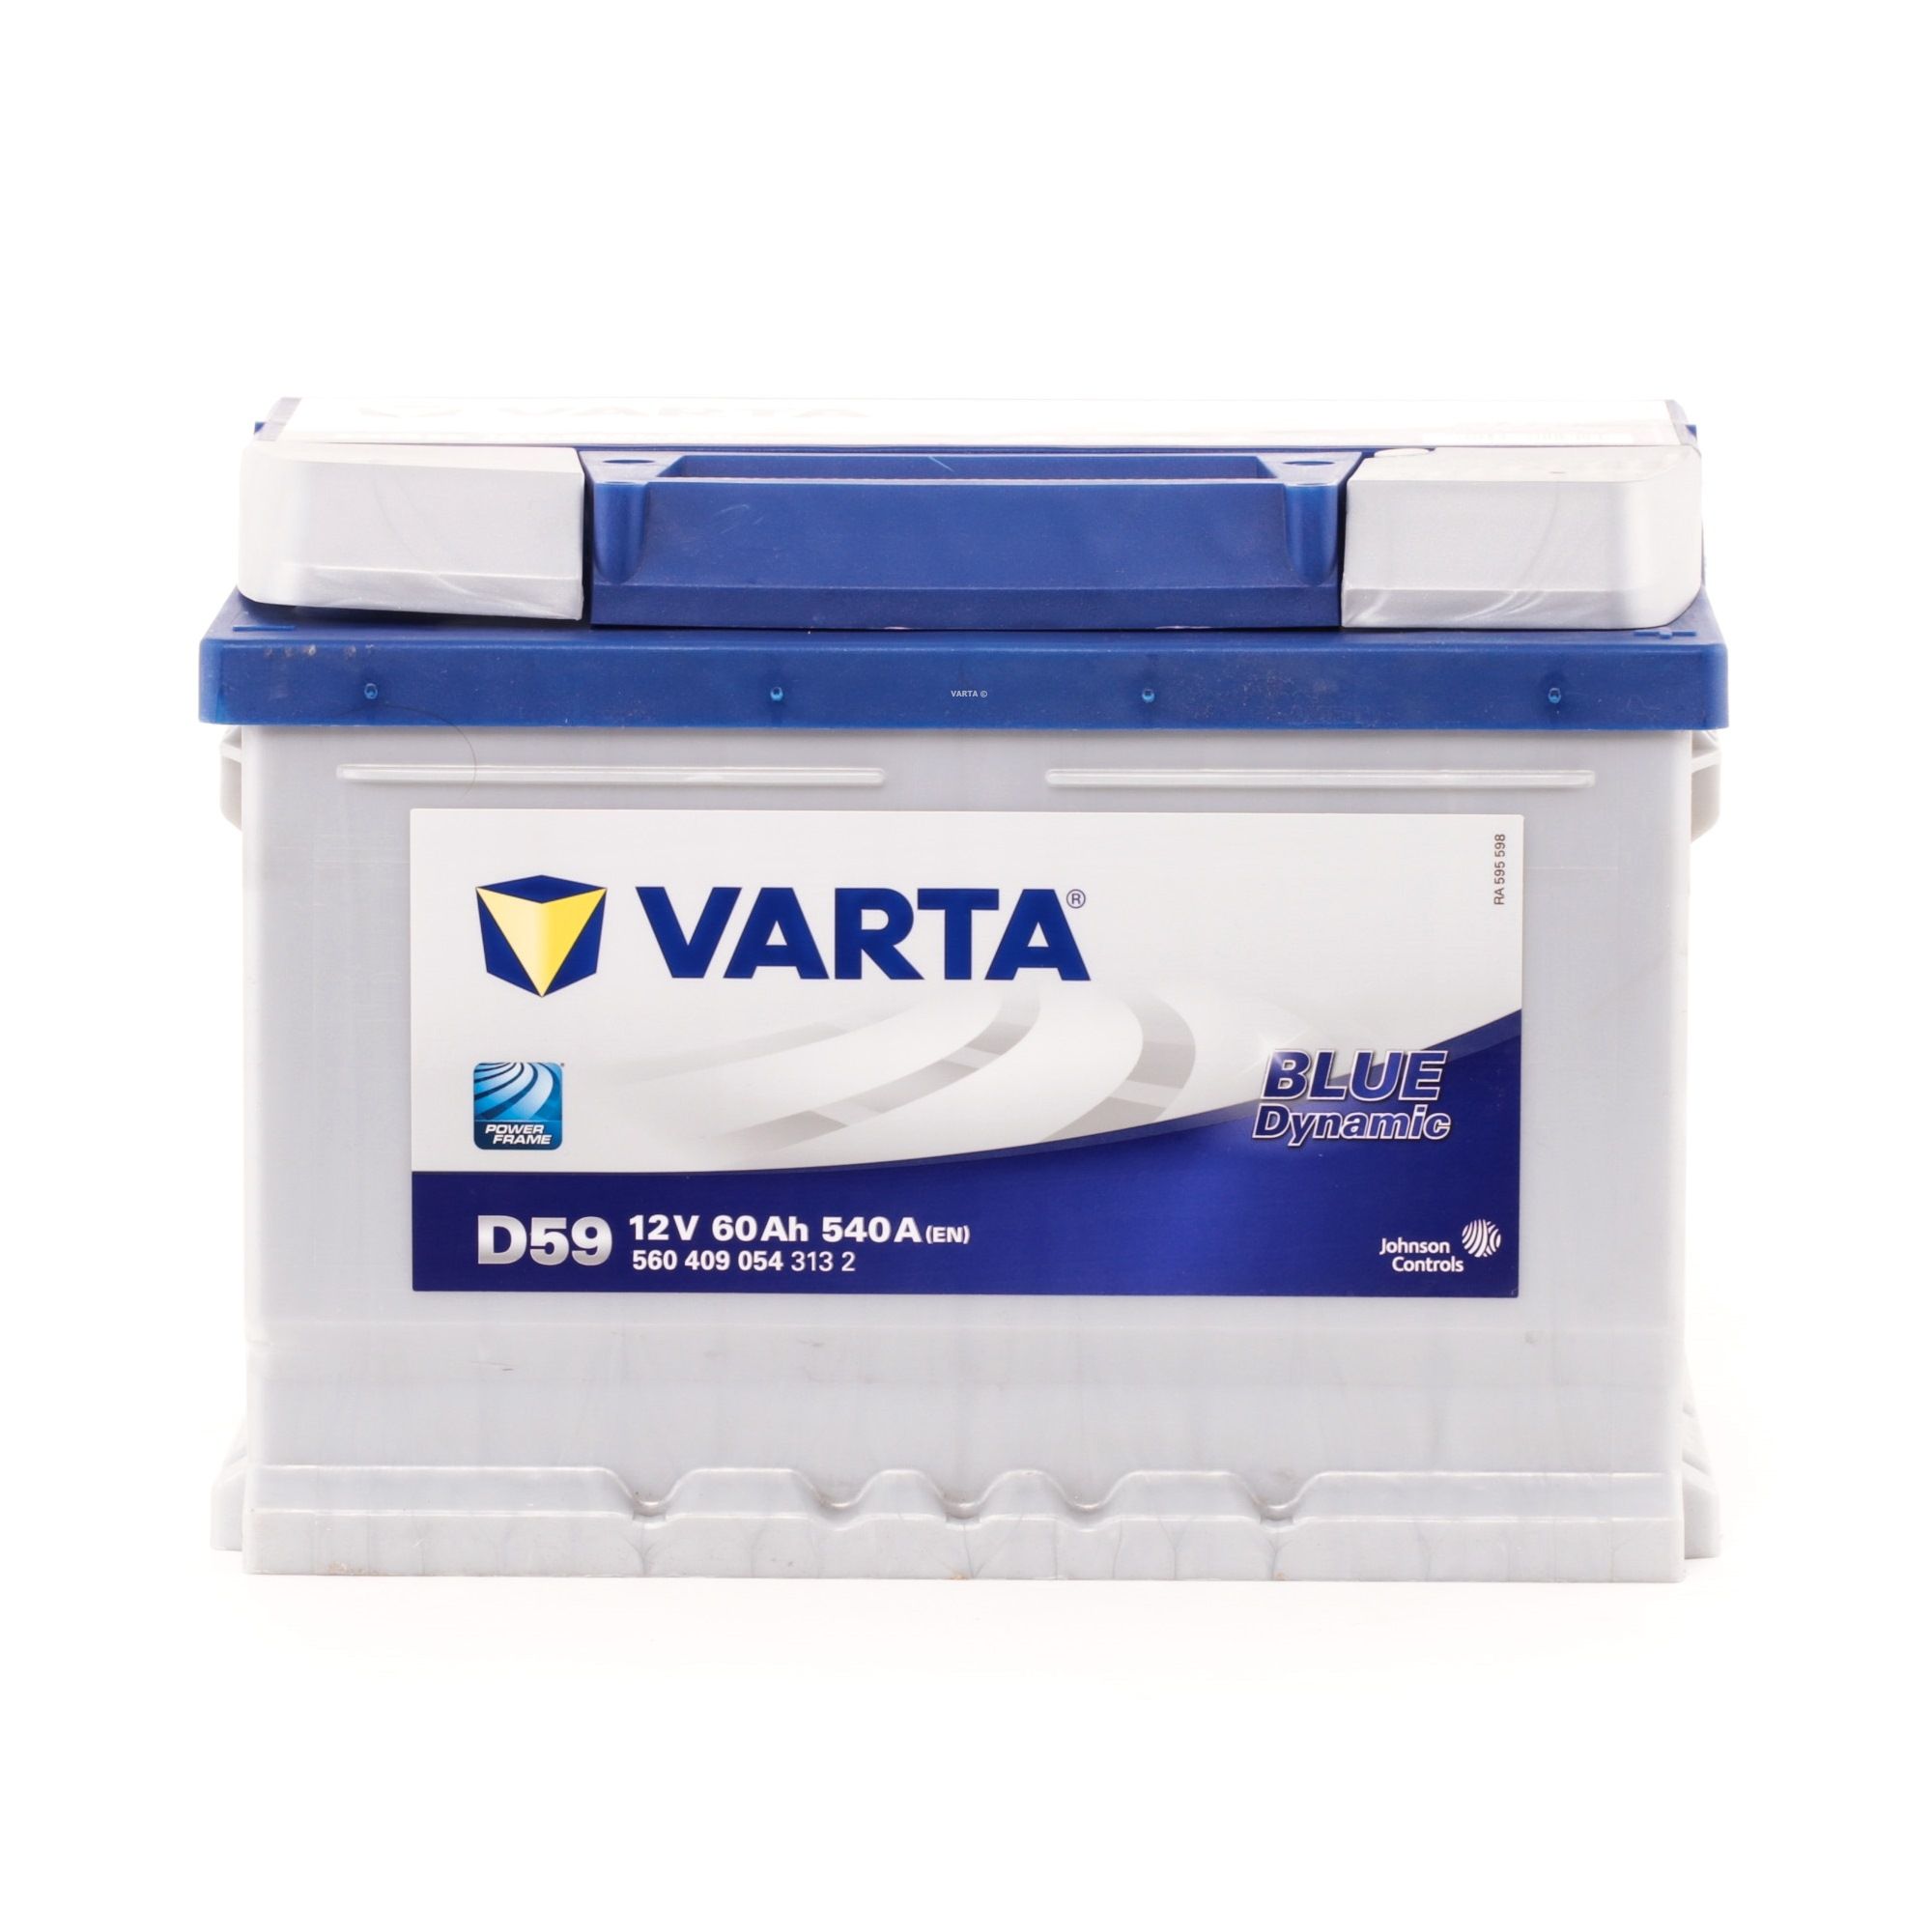 VARTA Starterbatterie Audi 5604090543132 in Original Qualität